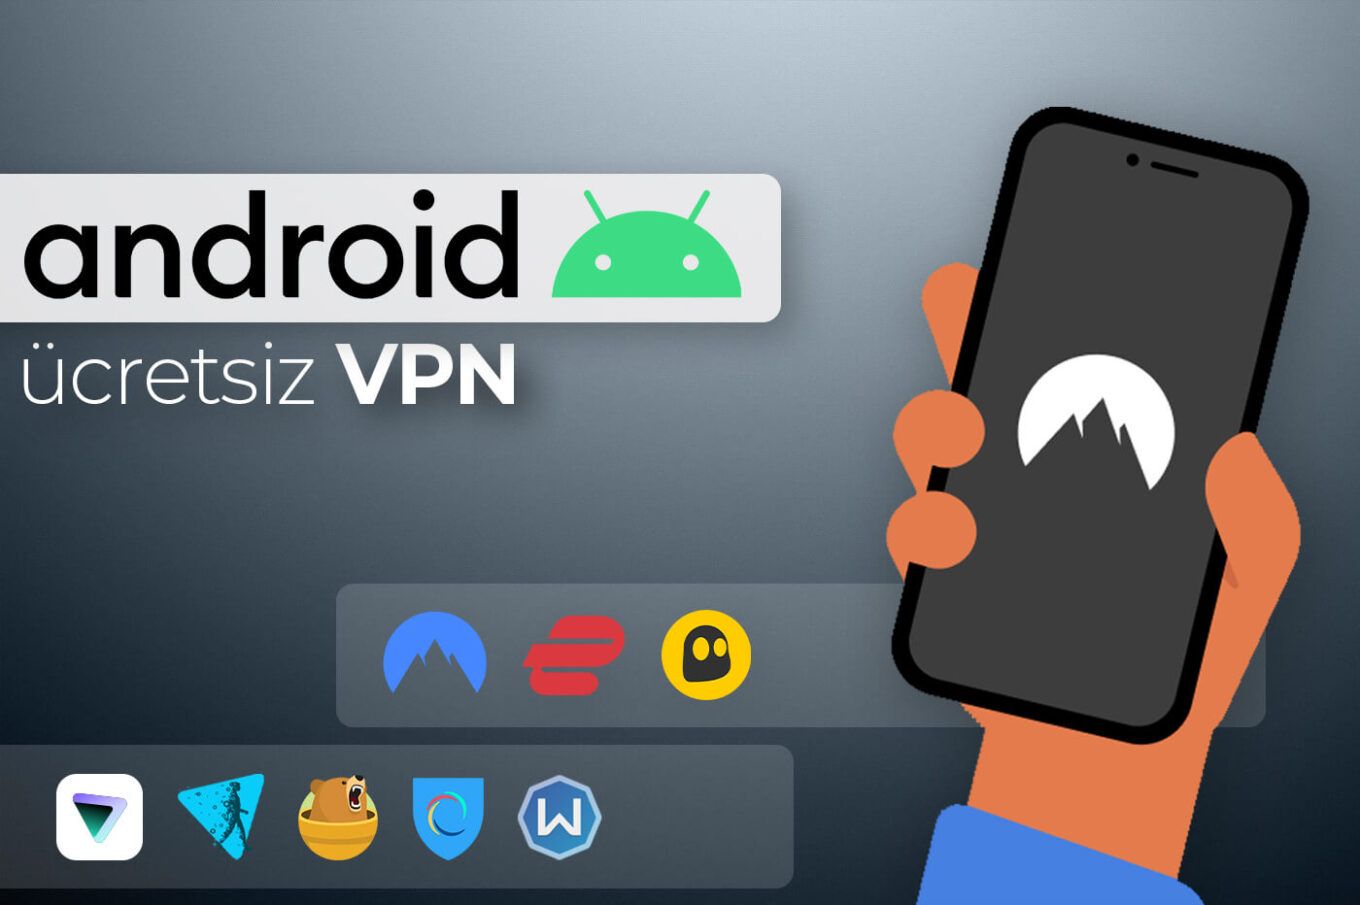 Android en iyi ücretsiz VPN